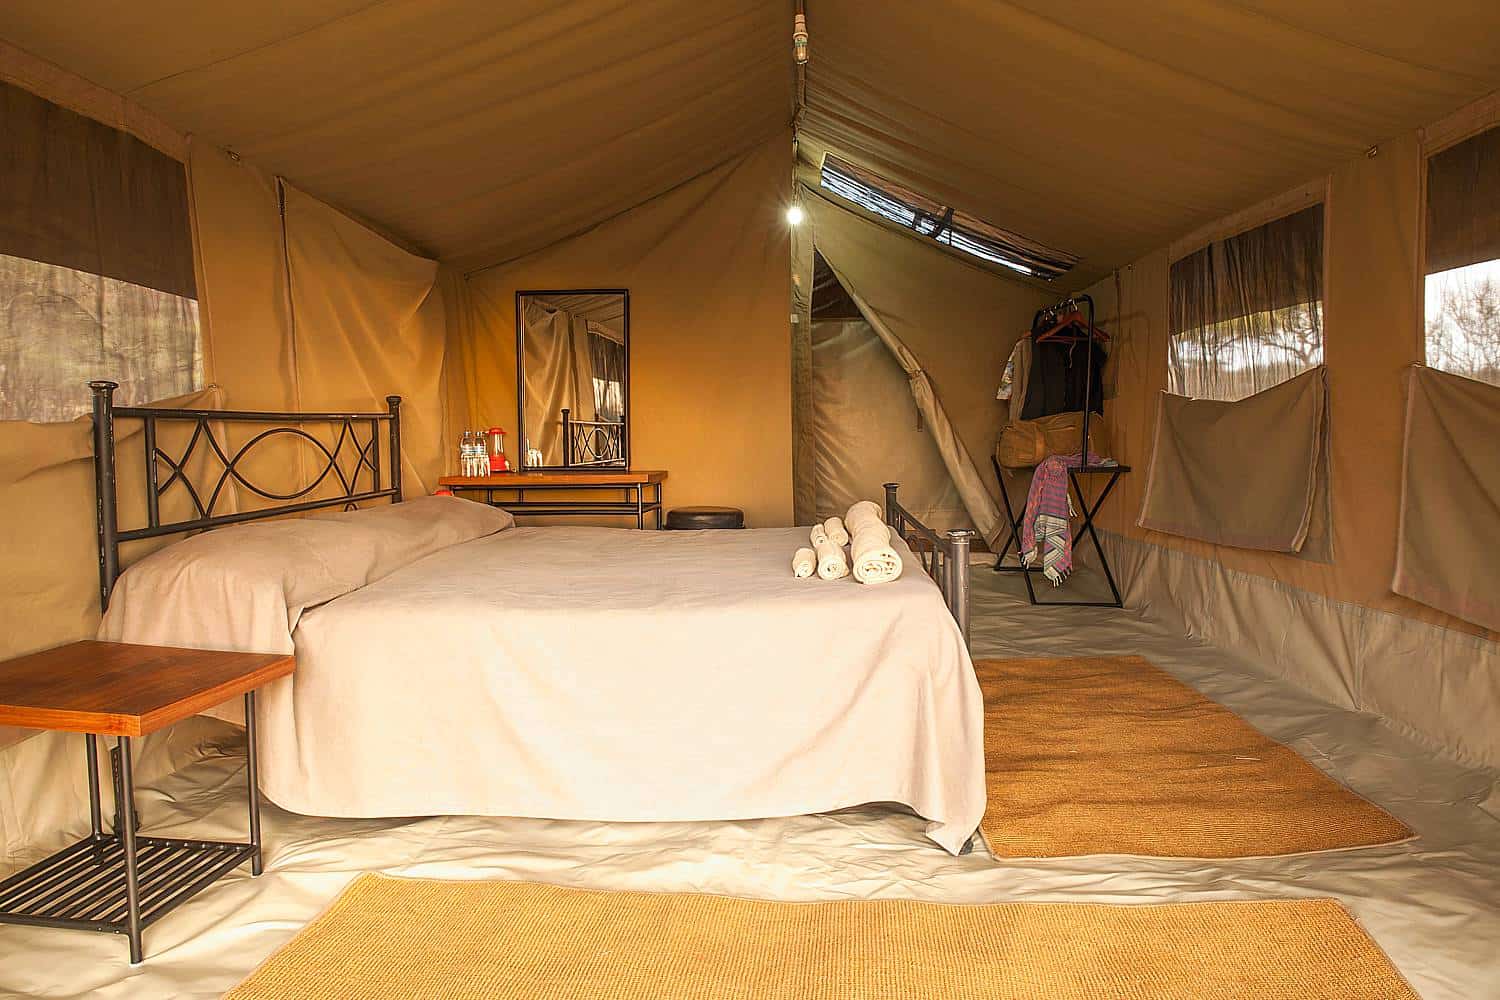 Ndutu Kati Kati Tented Camp Serengeti Tanzania, 6 Day Tanzania Mid-Range Safari